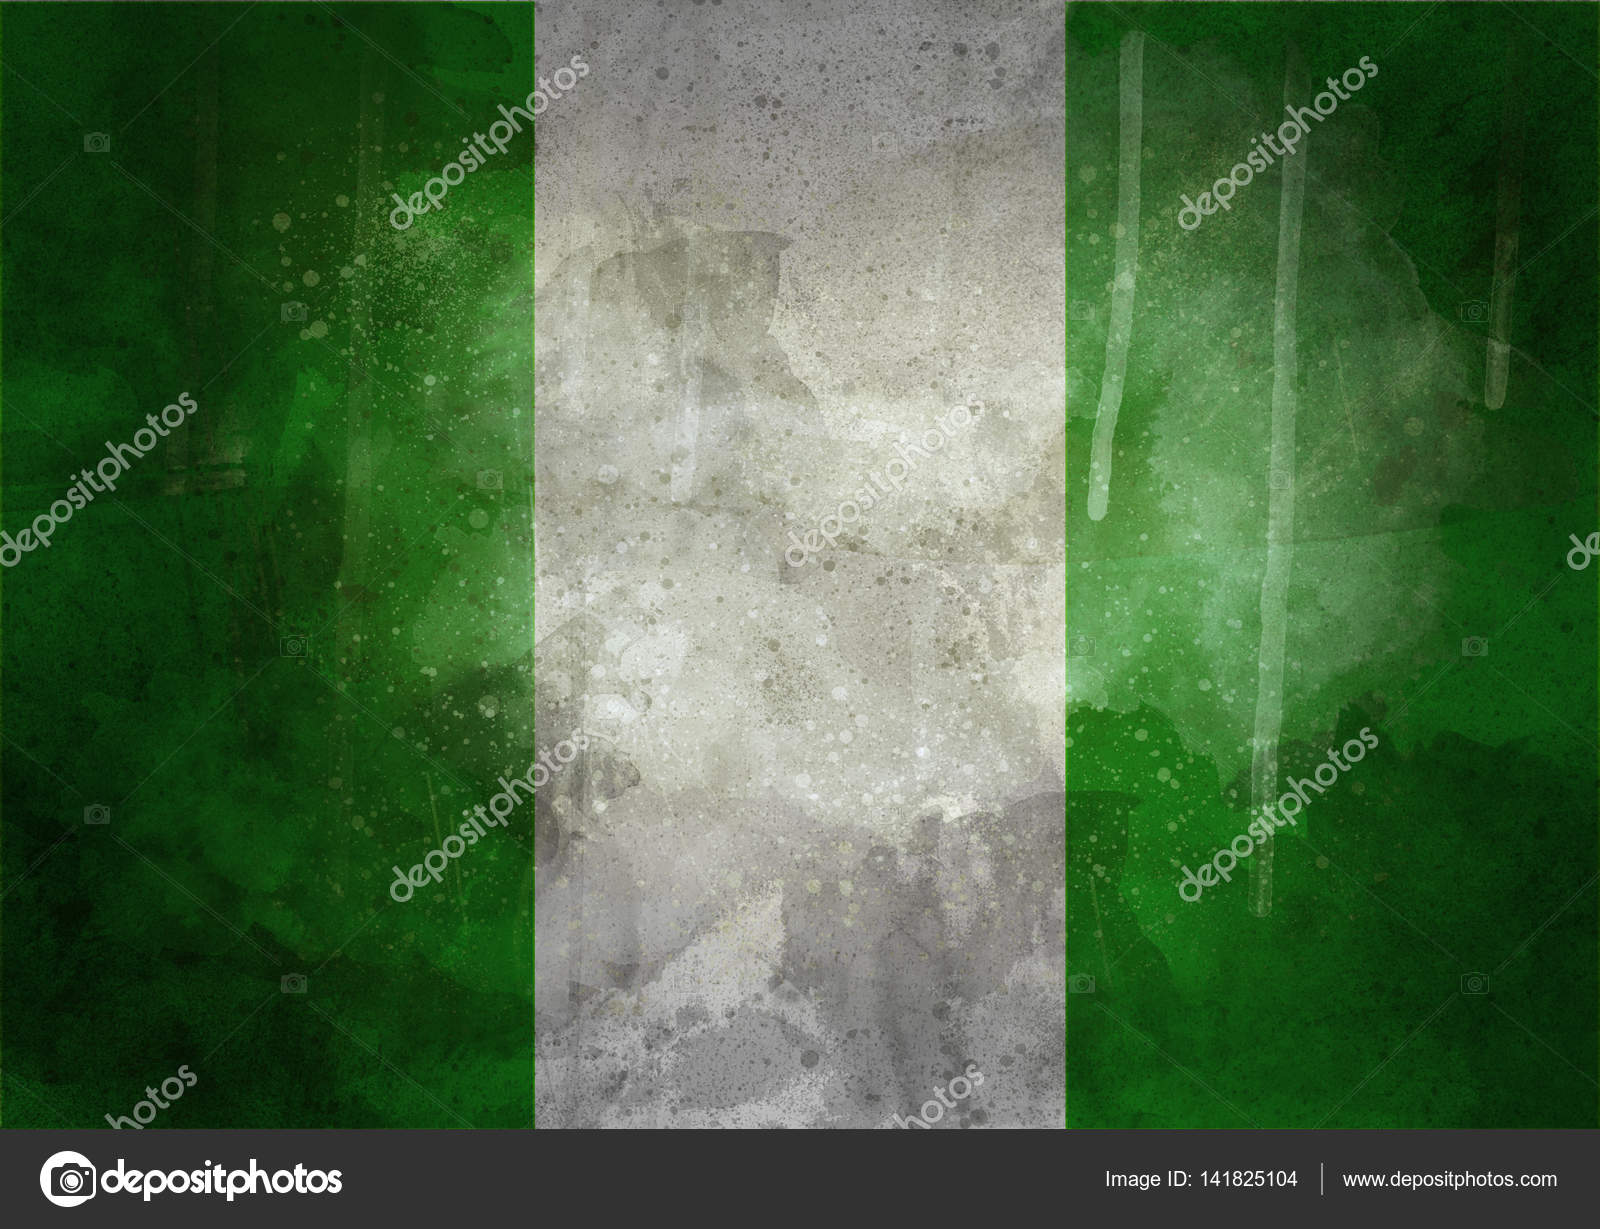 nigeria grunge flag illustration — Stock Photo © MrsWilkins #141825104